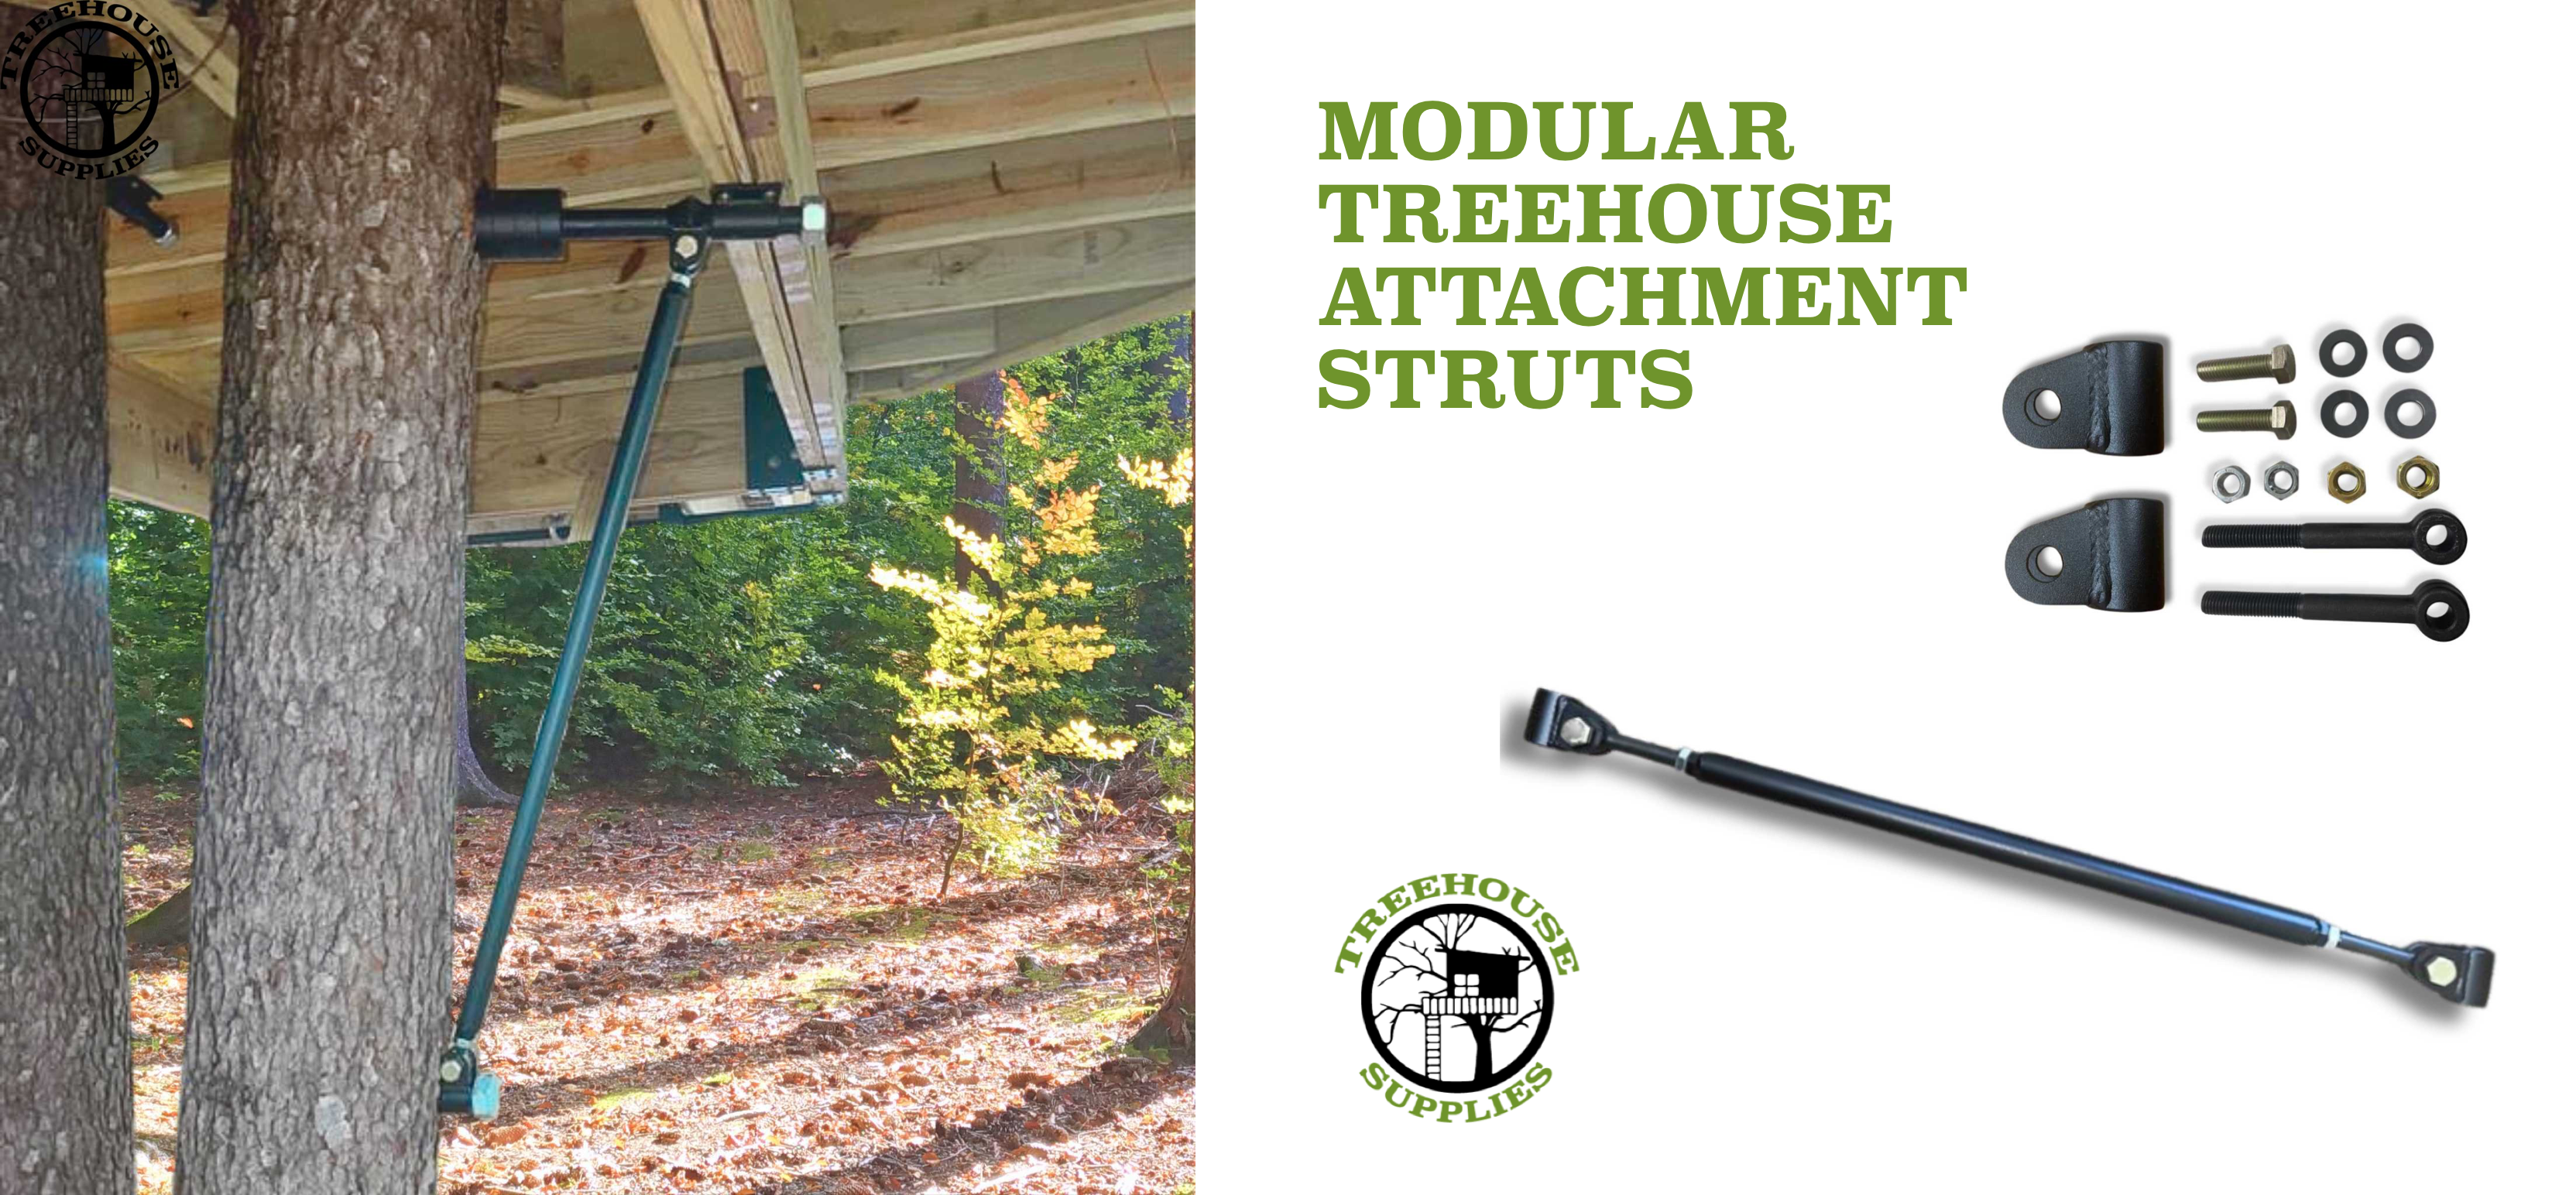 Modular Treehouse Attachment Struts: revolutionizing the way we build treetop sanctuaries. Treehouse Supplies